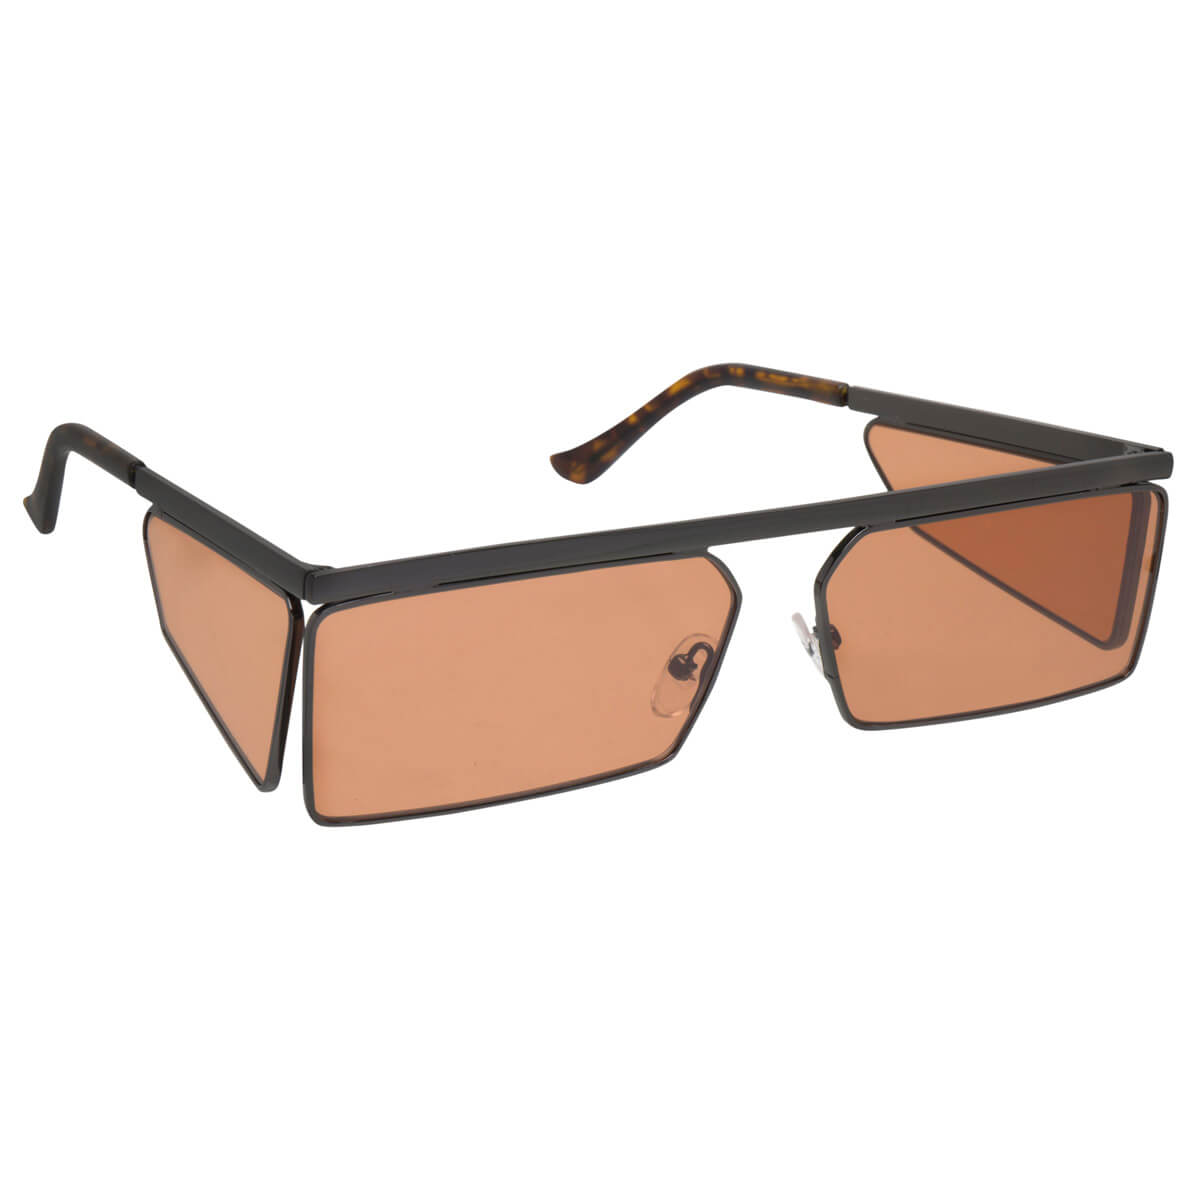 Rectangular low sunglasses flat top